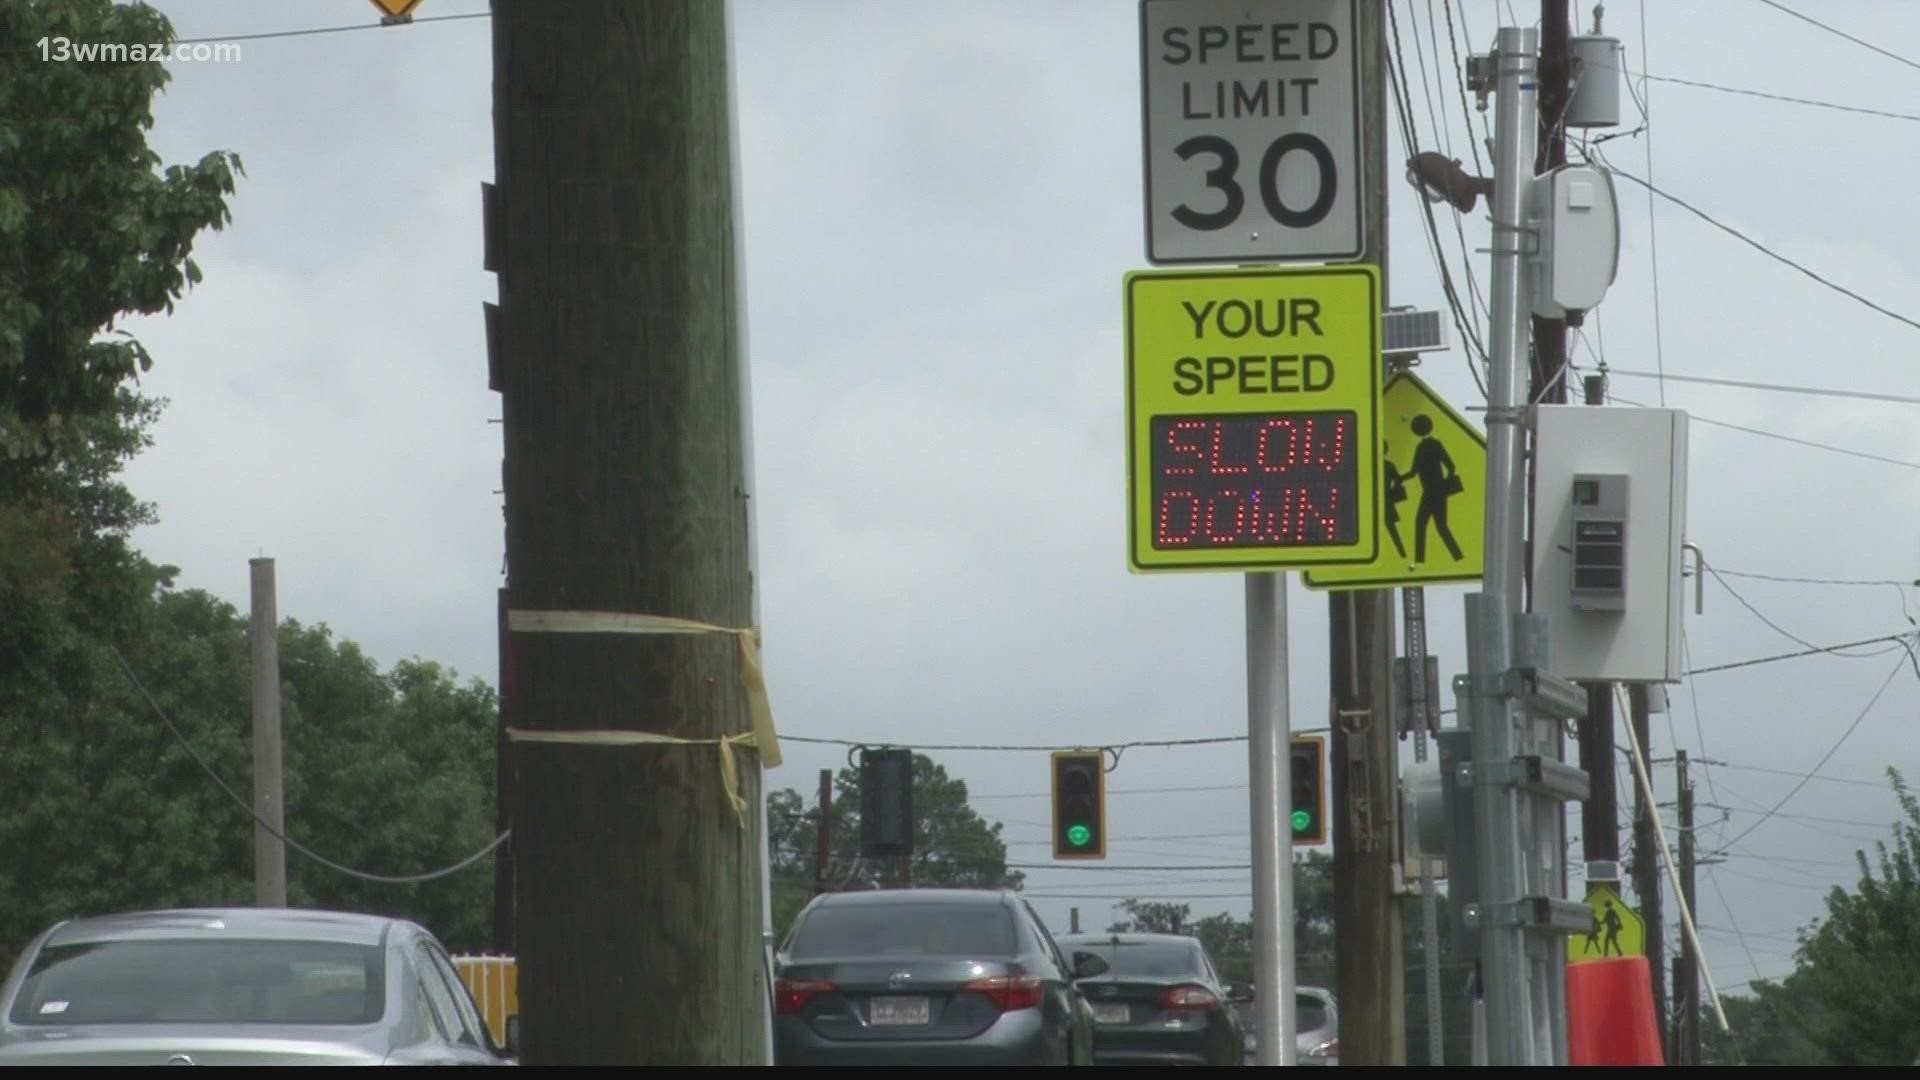 Speeding cameras have been up and running in Milledgeville school zones since last November.